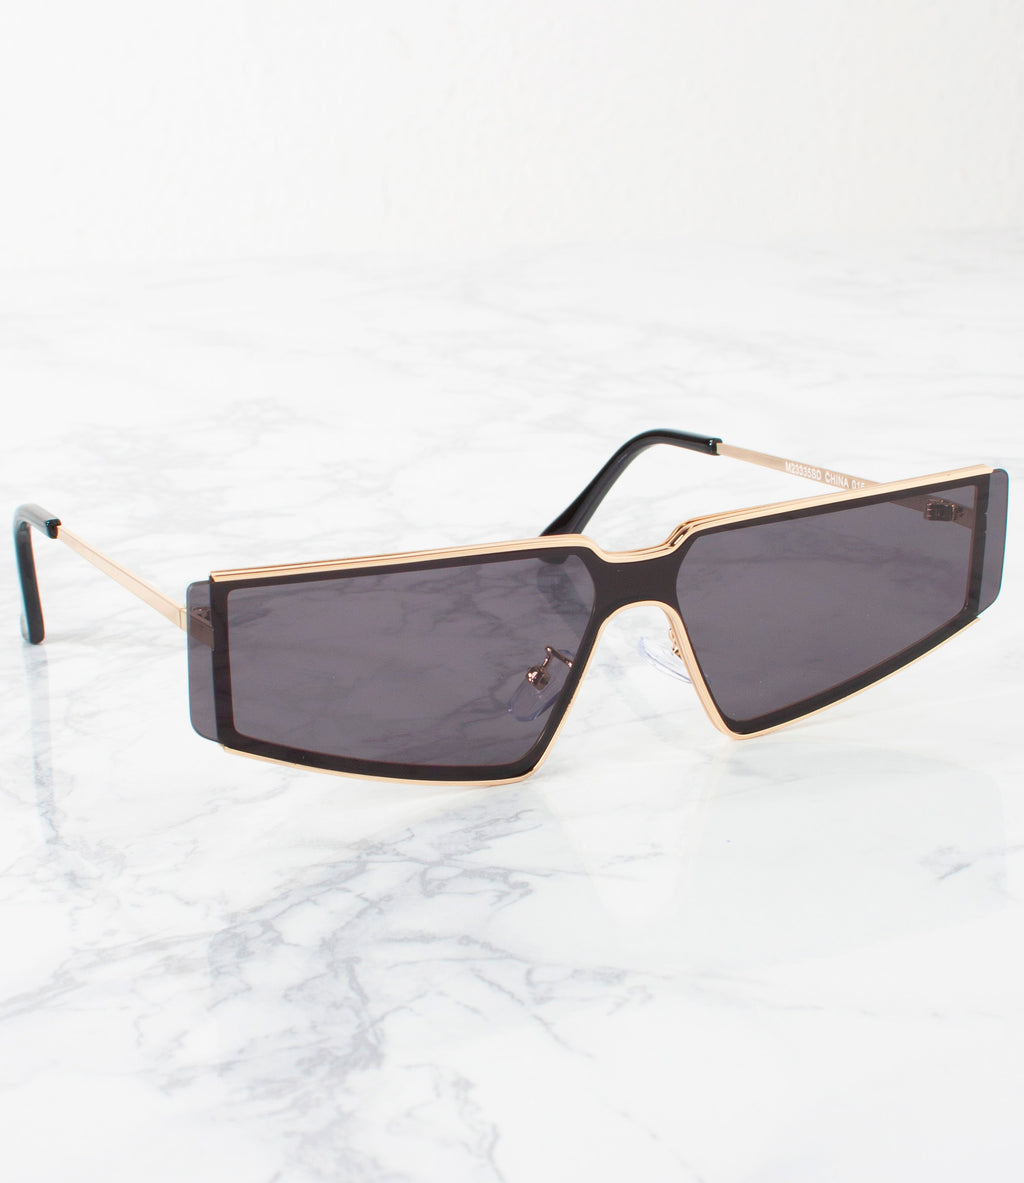 Wholesale Novelty Sunglasses | Buy Novelty Sunglasses in Bulk